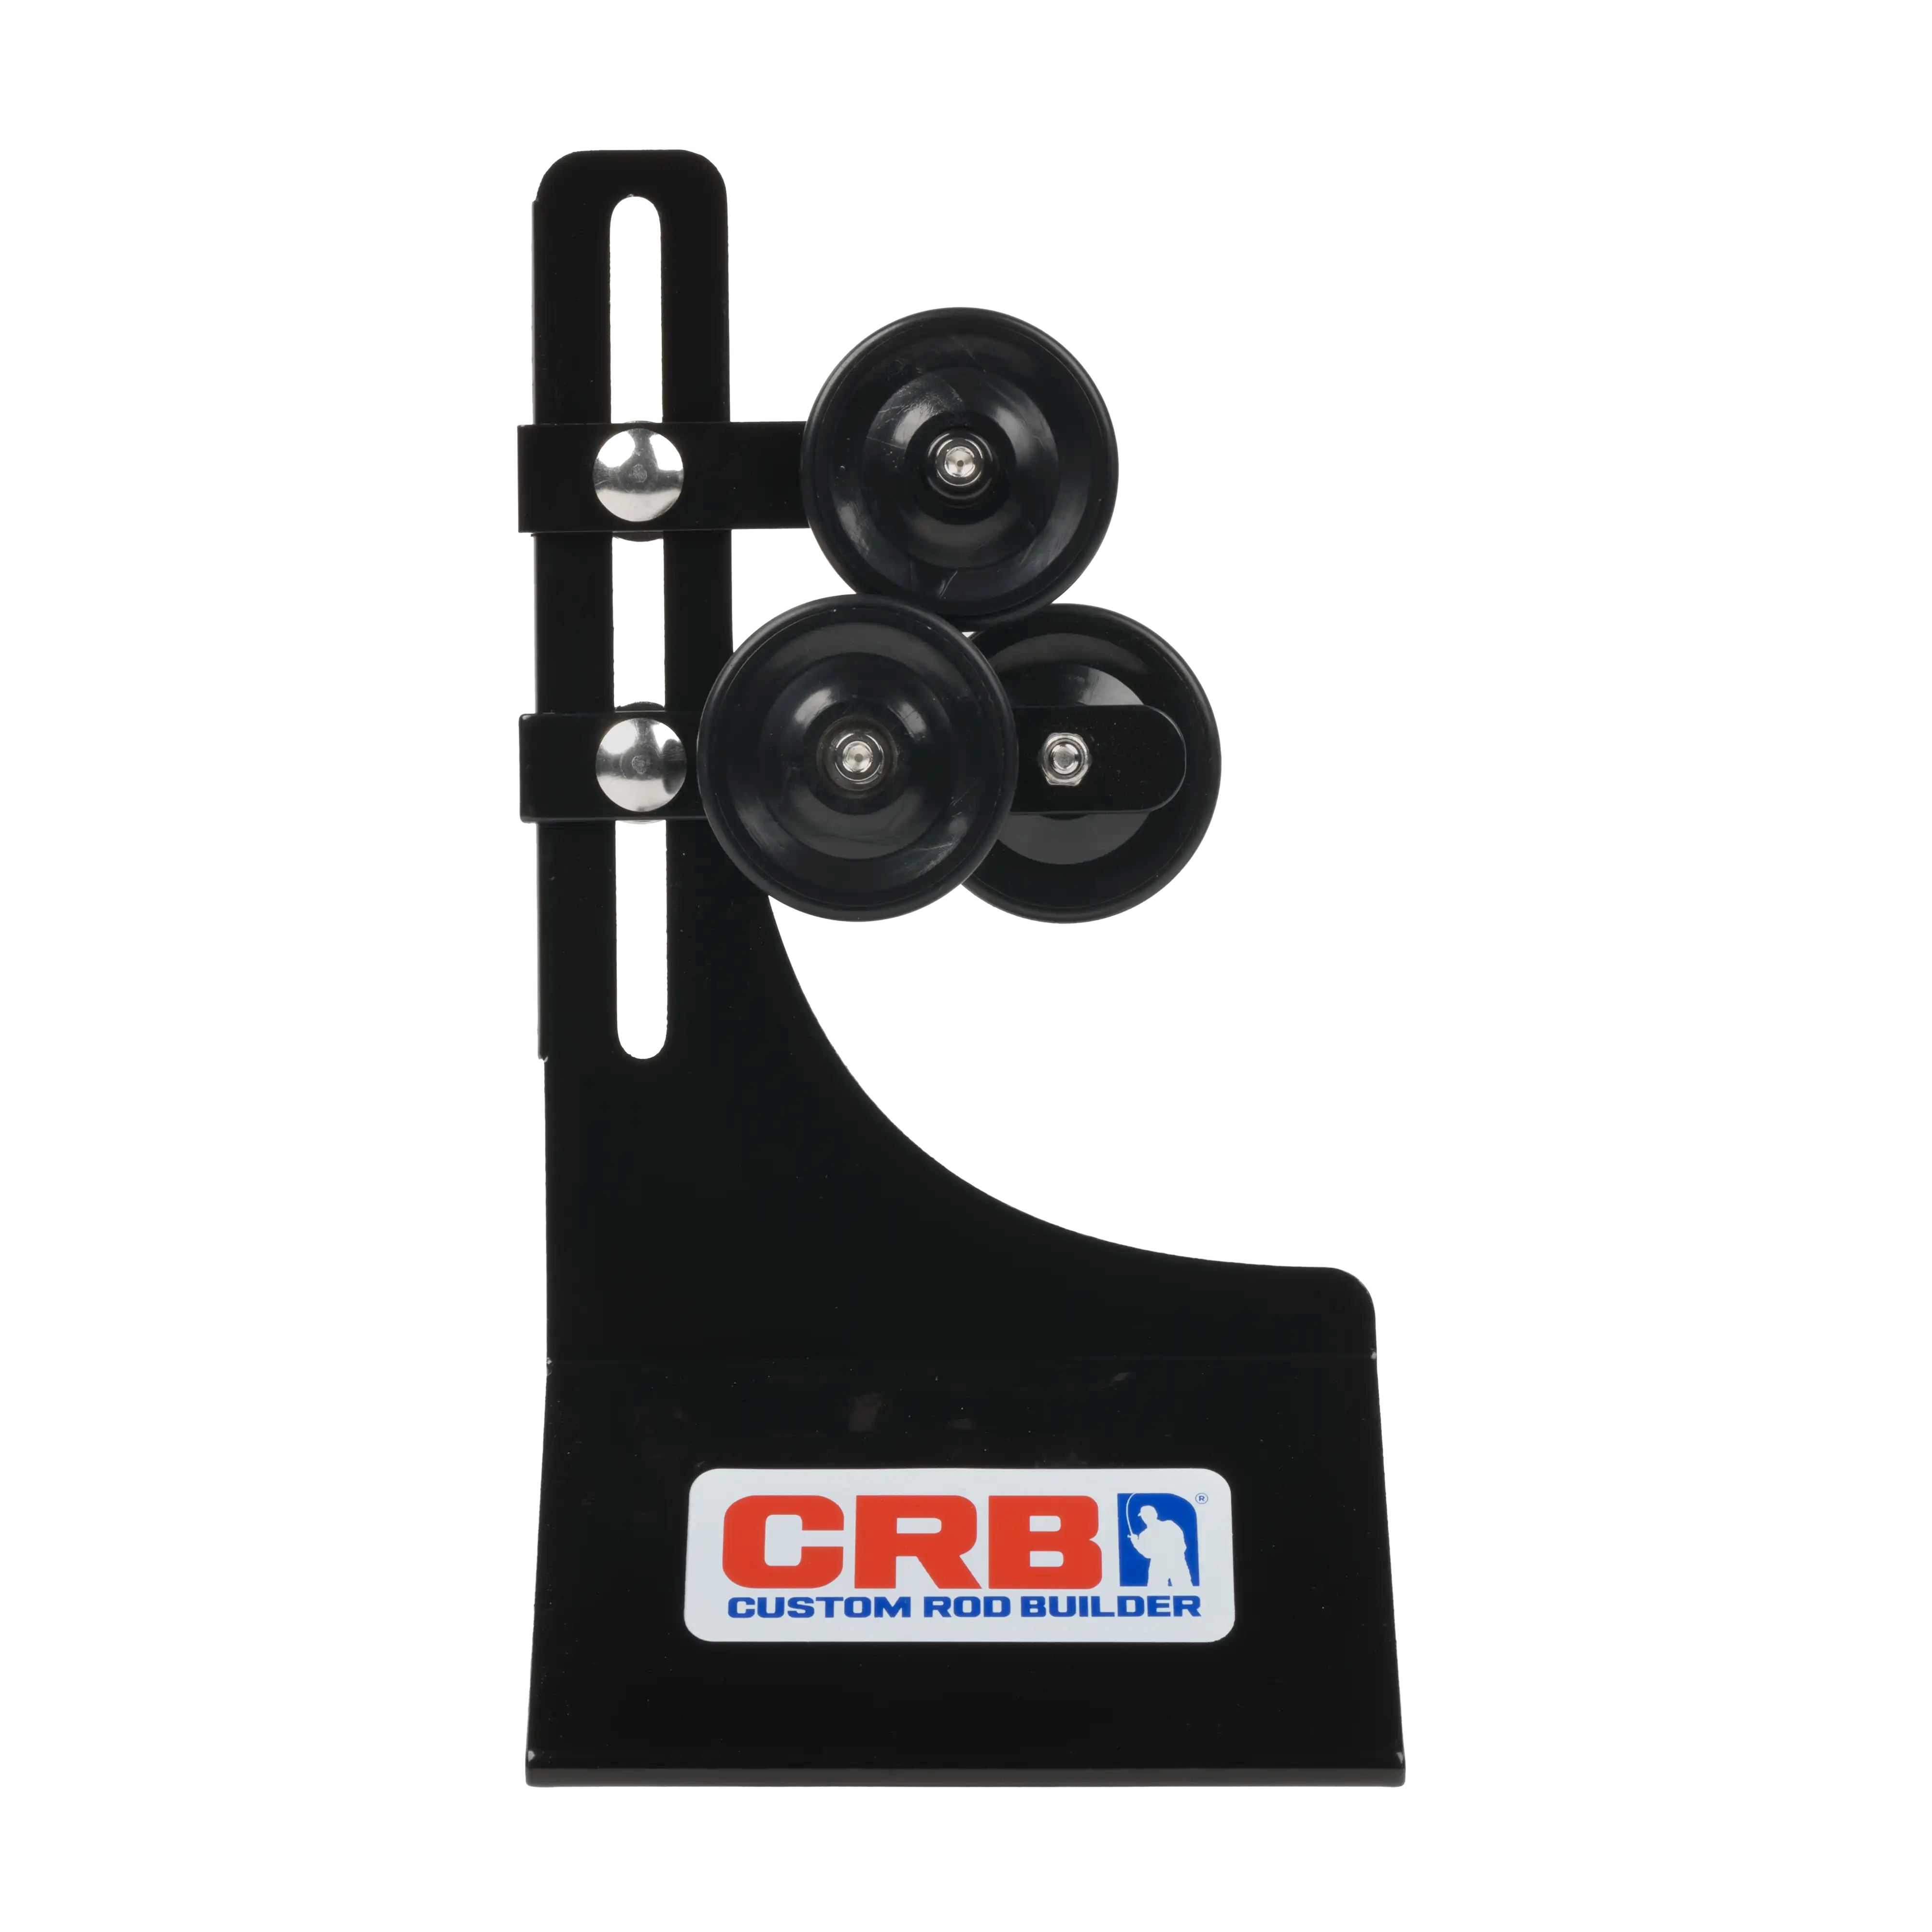 CRB/RBS Tools & Equipment